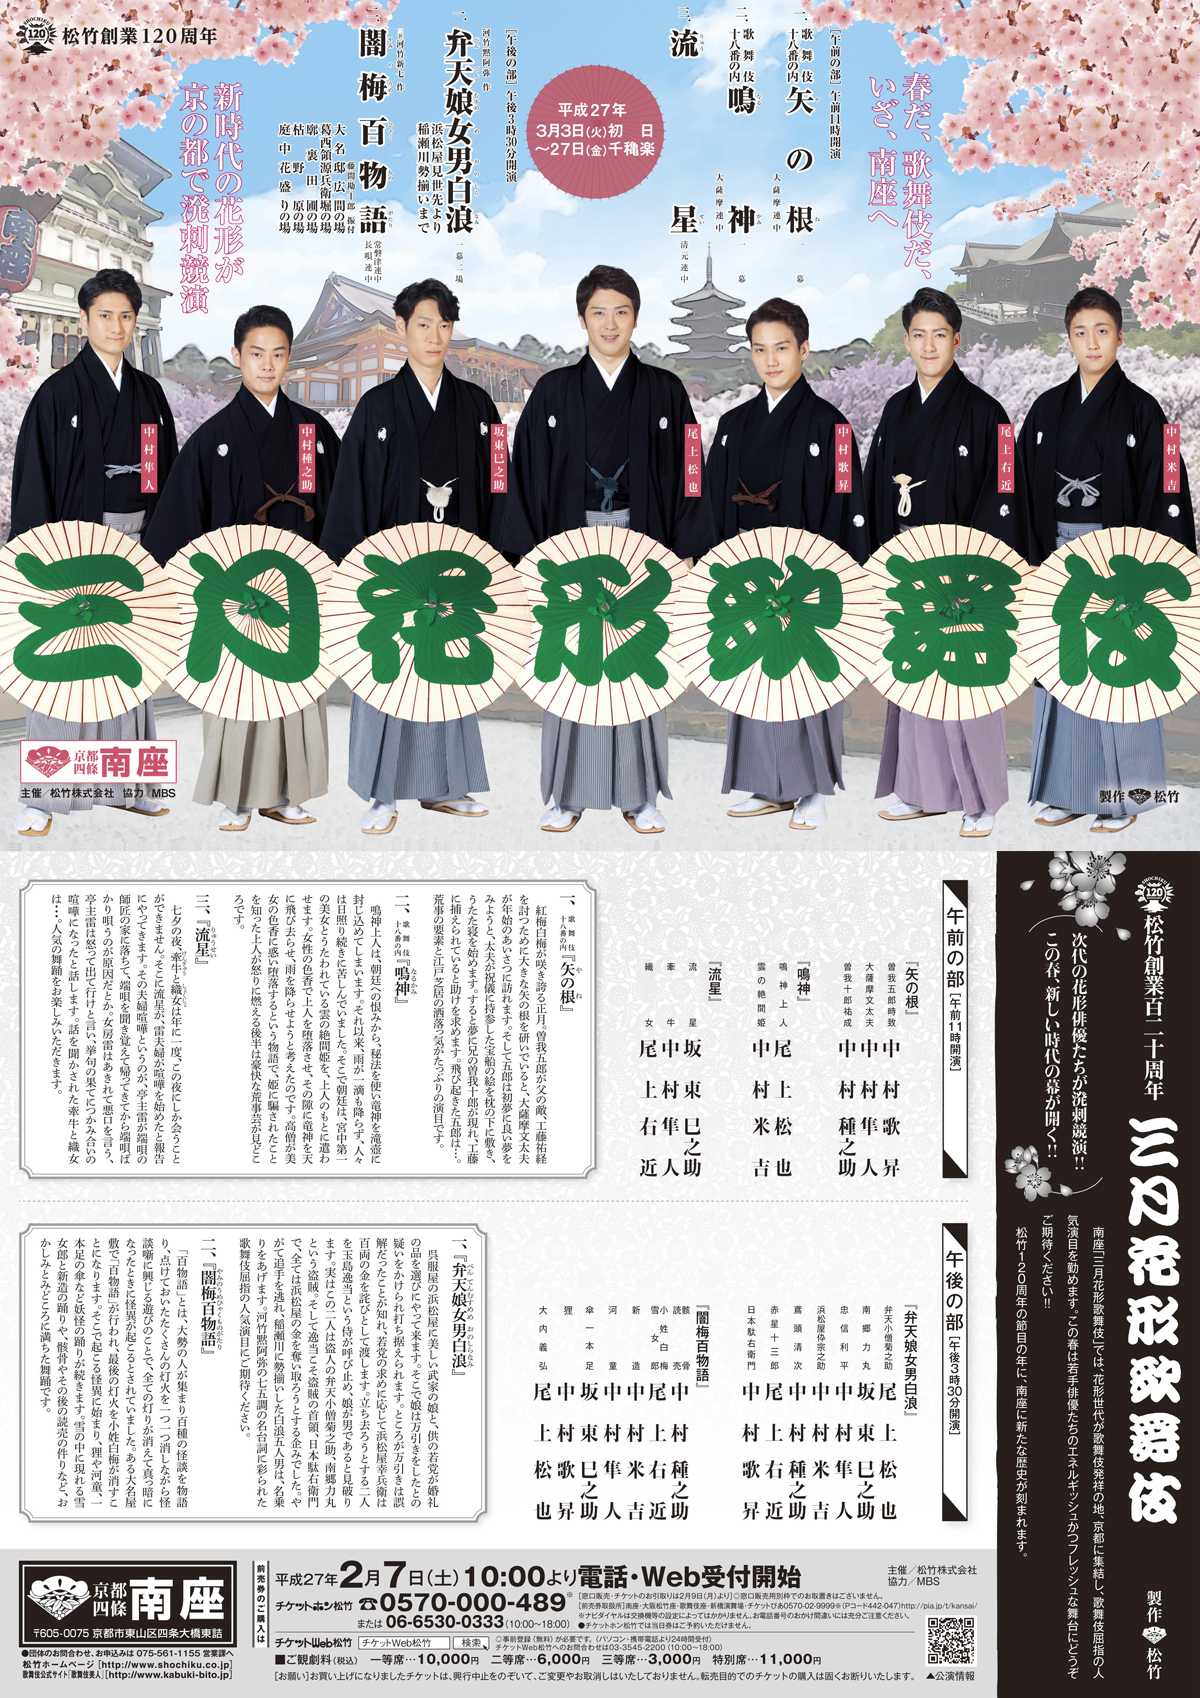 http://blog.yumeyakata.com/staff/minamiza_201503fb.jpg